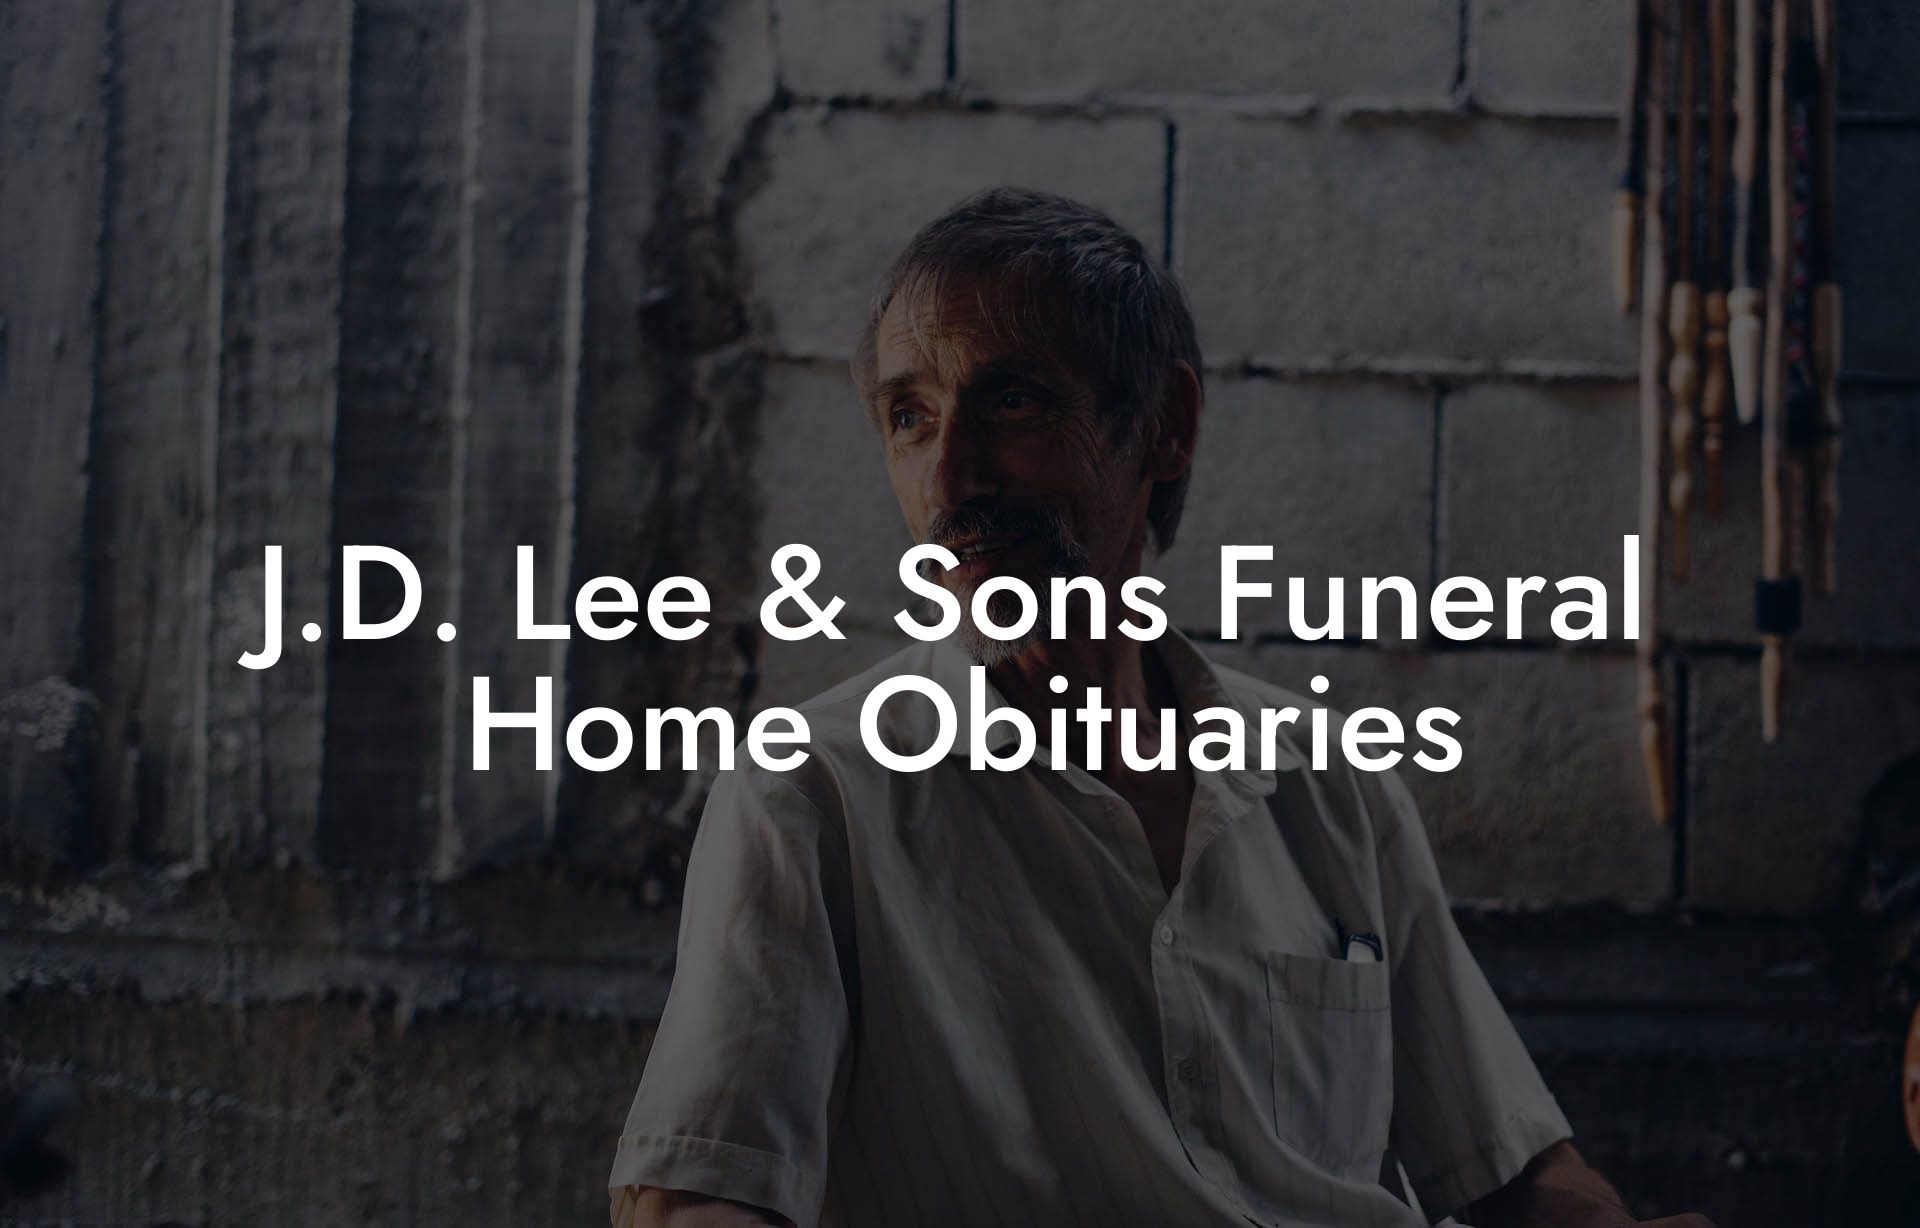 J.D. Lee & Sons Funeral Home Obituaries